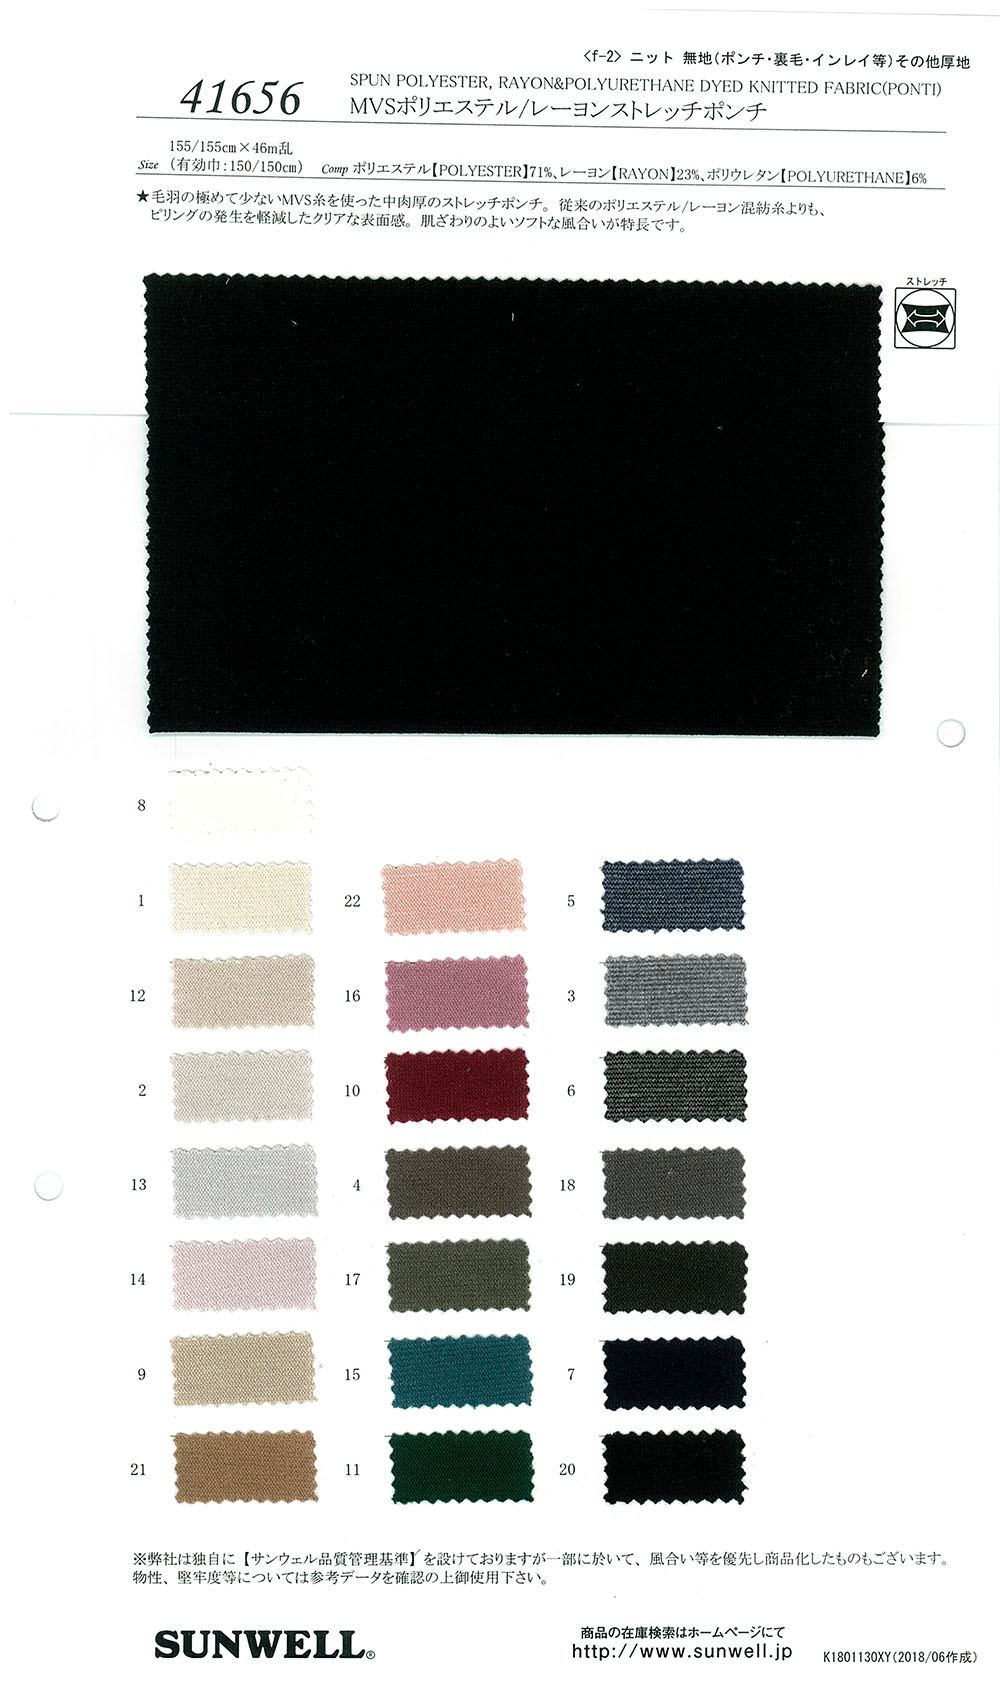 41656 MVS Polyester/rayon Stretch Ponte[Textile / Fabric] SUNWELL